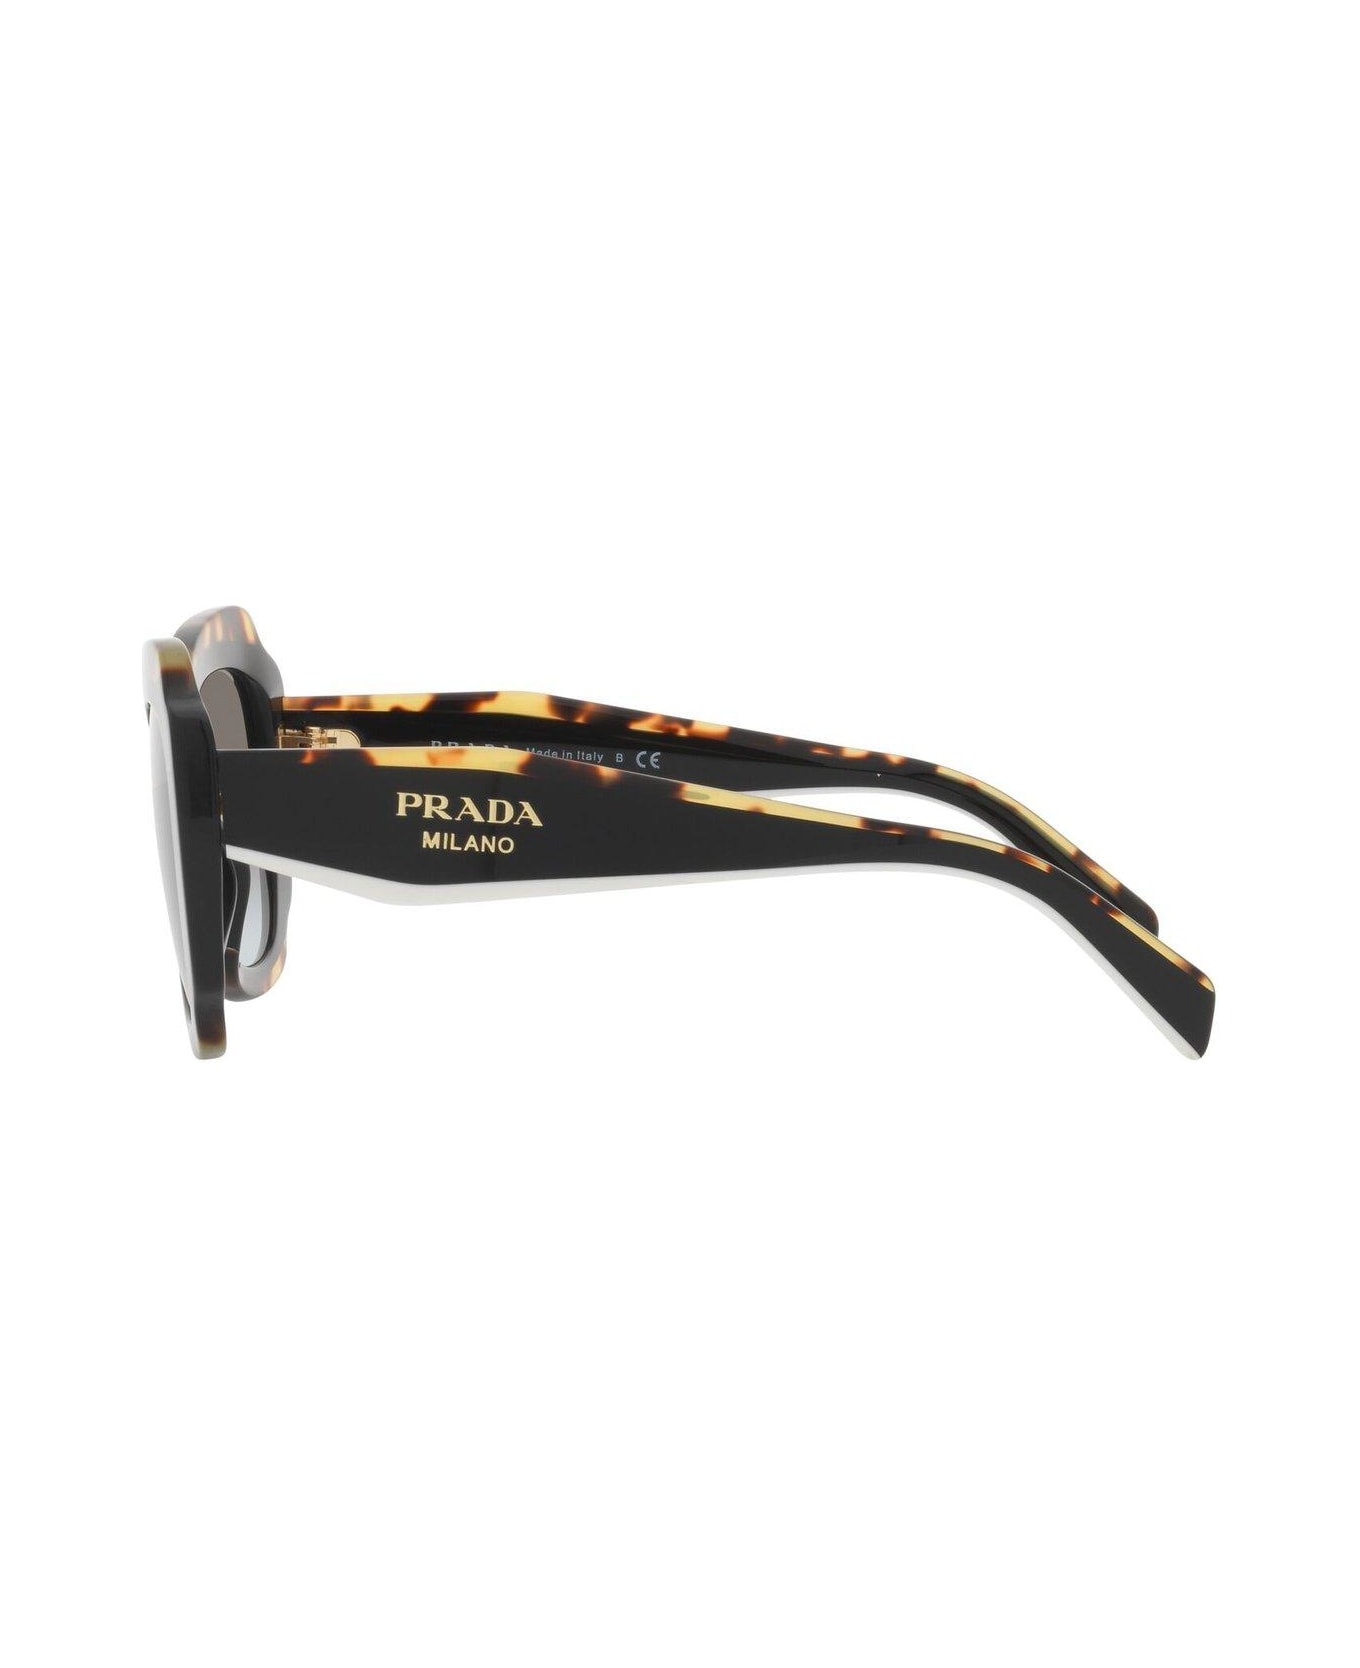 Prada Eyewear Square Frame Sunglasses - 01M0A7 サングラス